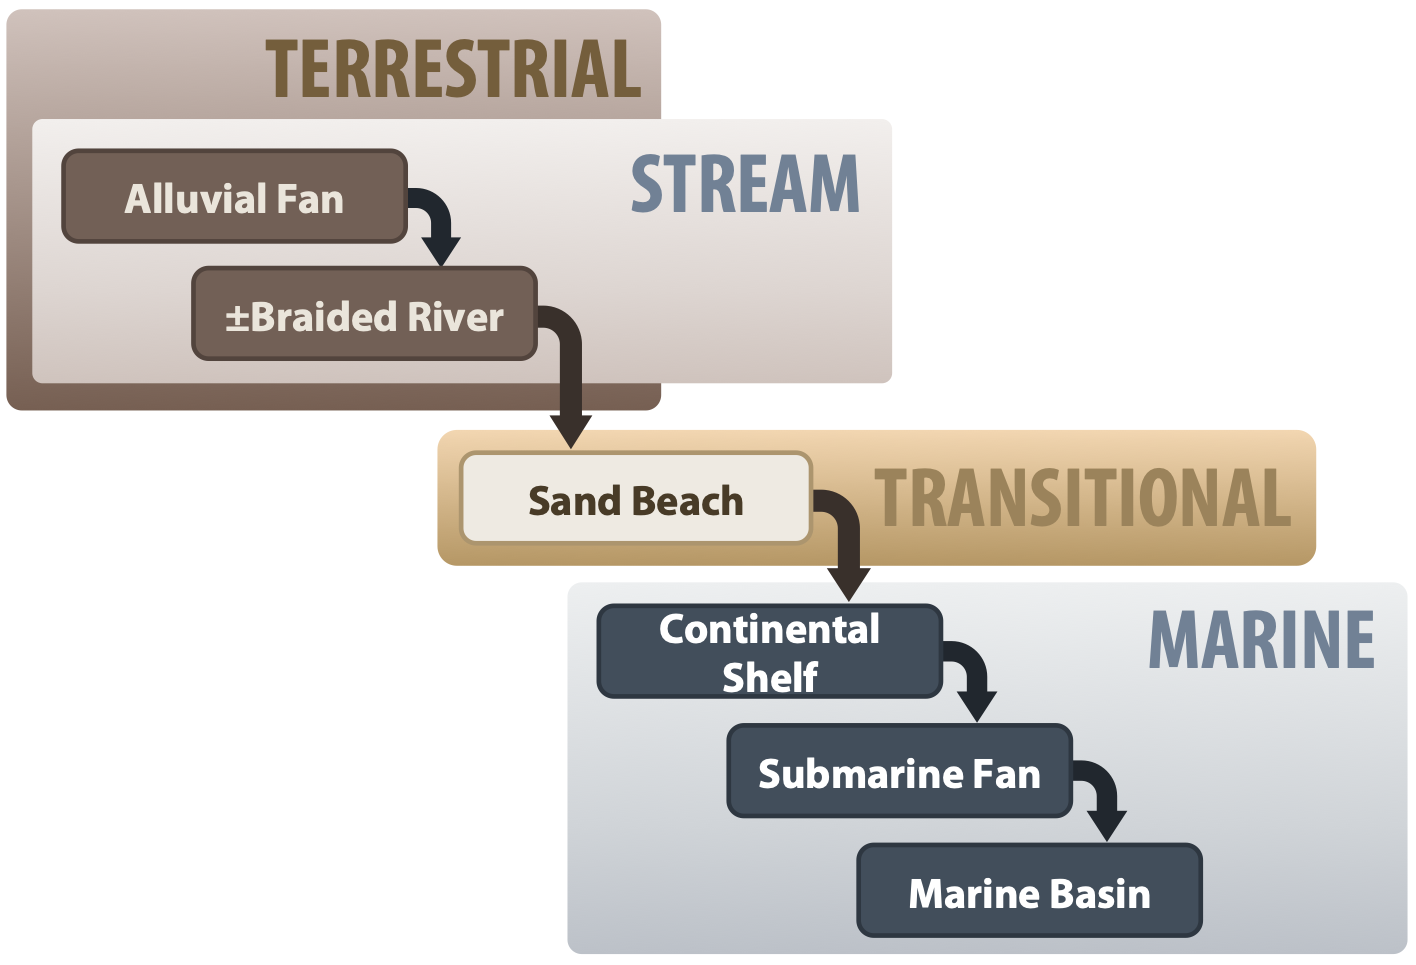 Alluvial Fan ↓ (+/-Braided river) Sand Beach ↓ Continental Shelf ↓ Submarine Fan ↓ Marine Basin